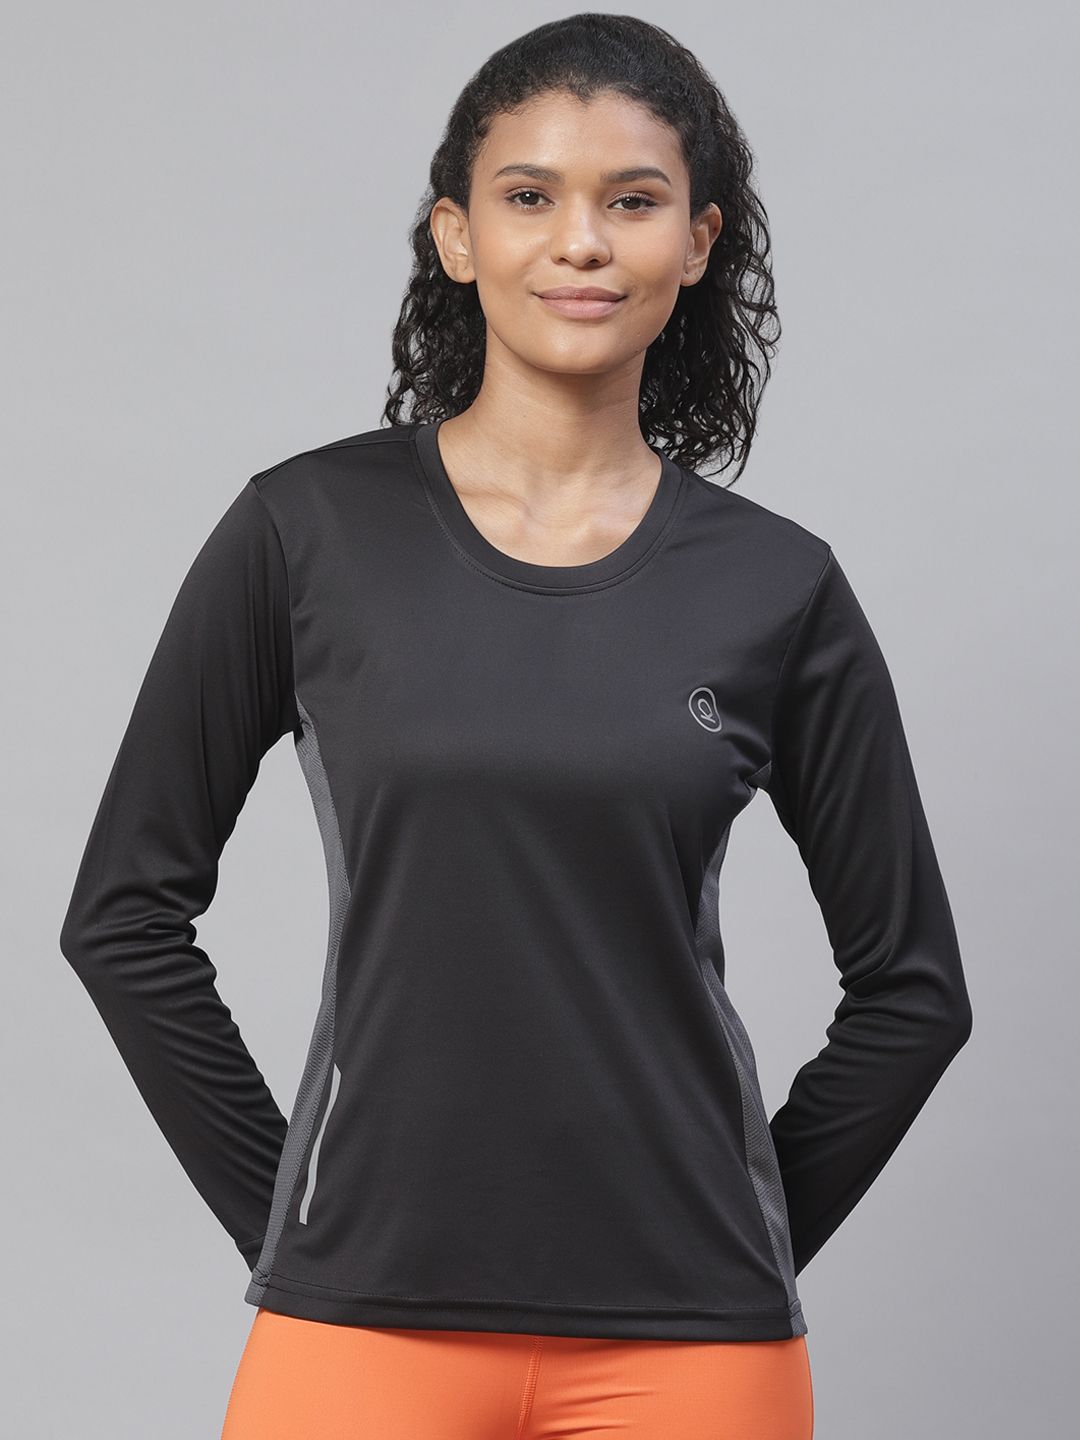 Chkokko Women Black & Grey Colourblocked Round Neck Yoga T-shirt Price in India